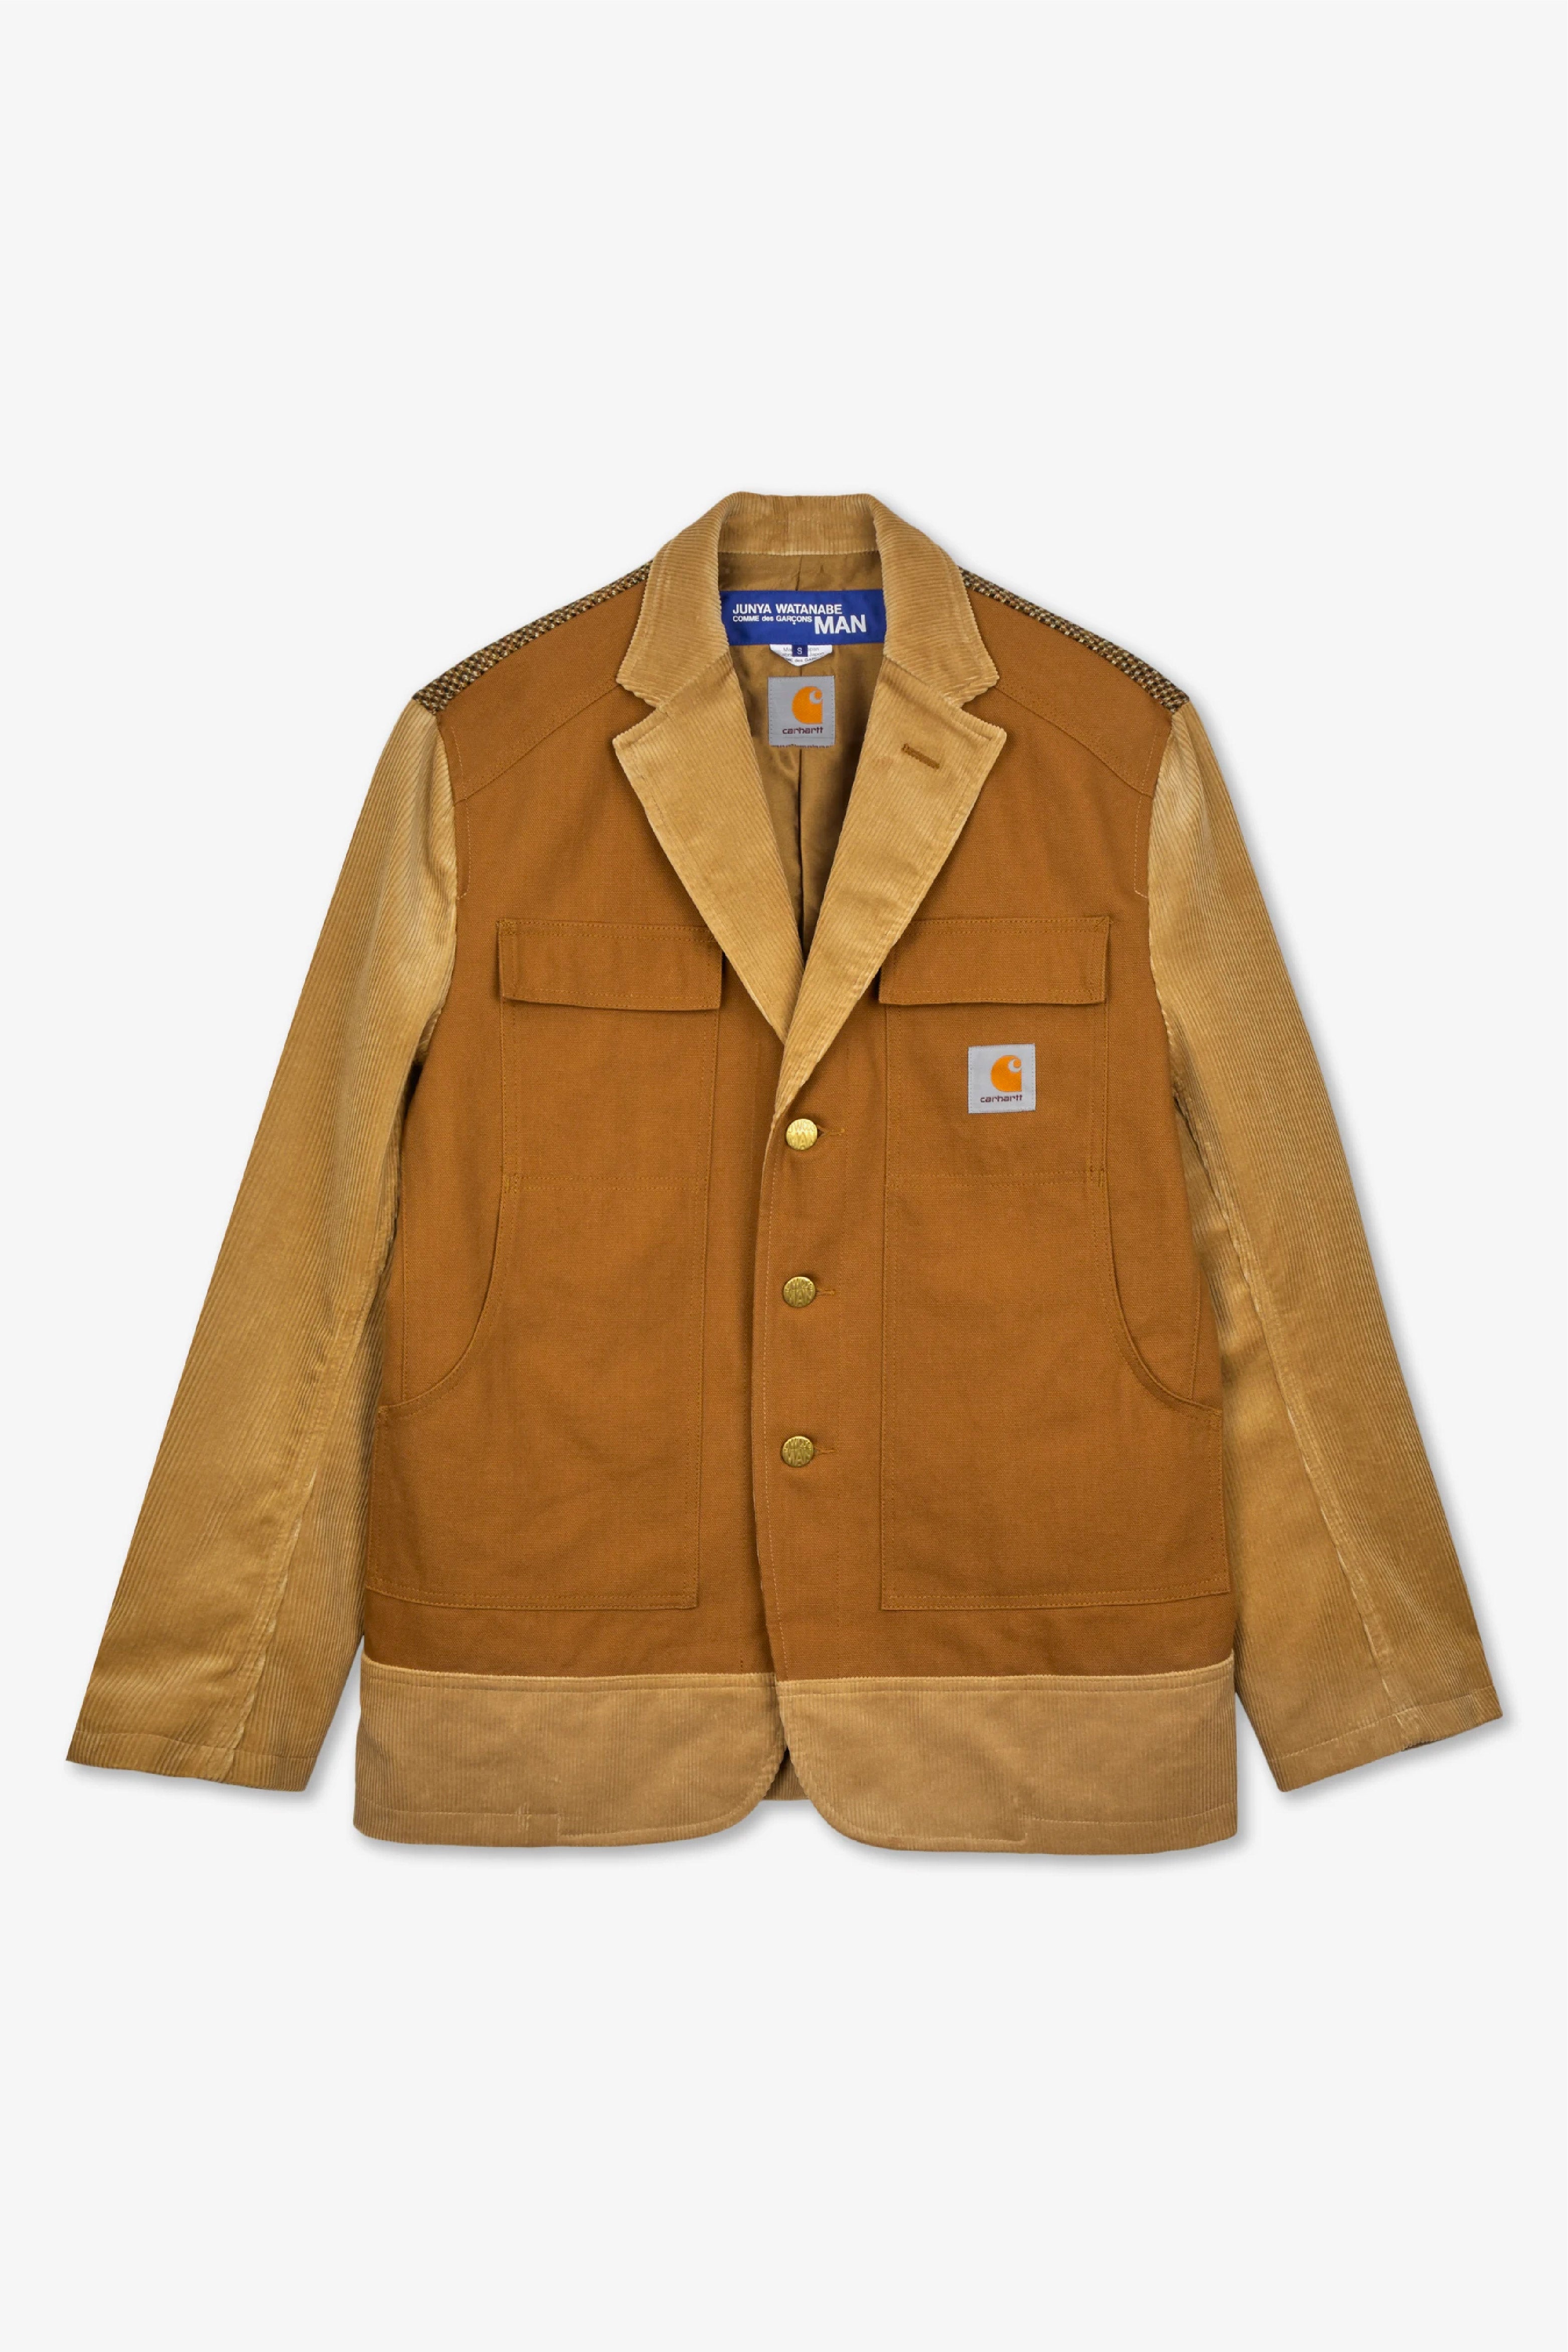 Selectshop FRAME - JUNYA WATANABE MAN Jacket Outerwear Dubai